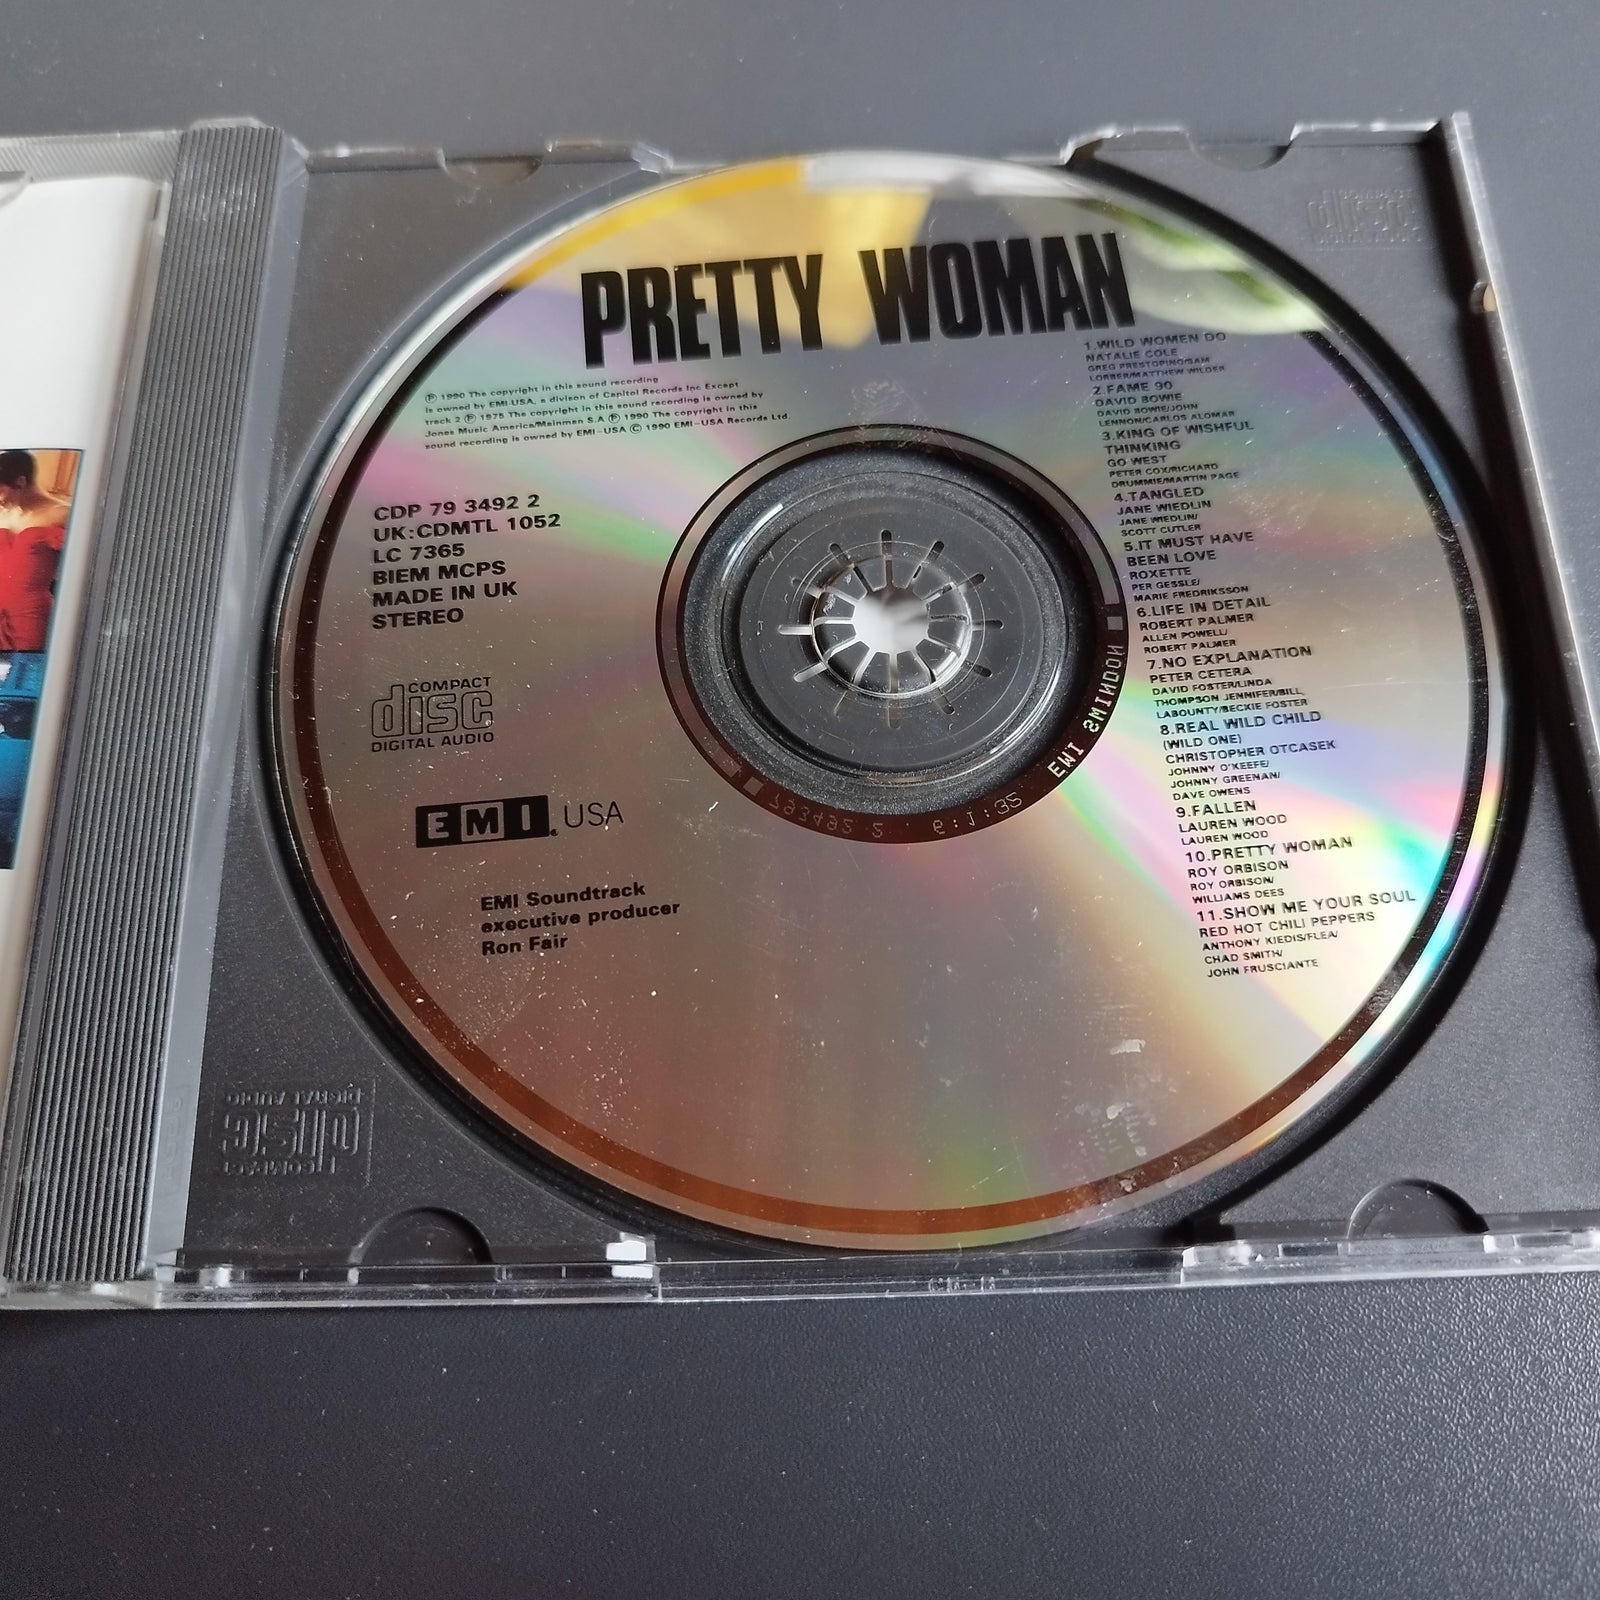 David Bowie m.fl.: Pretty Woman soundtrack, pop